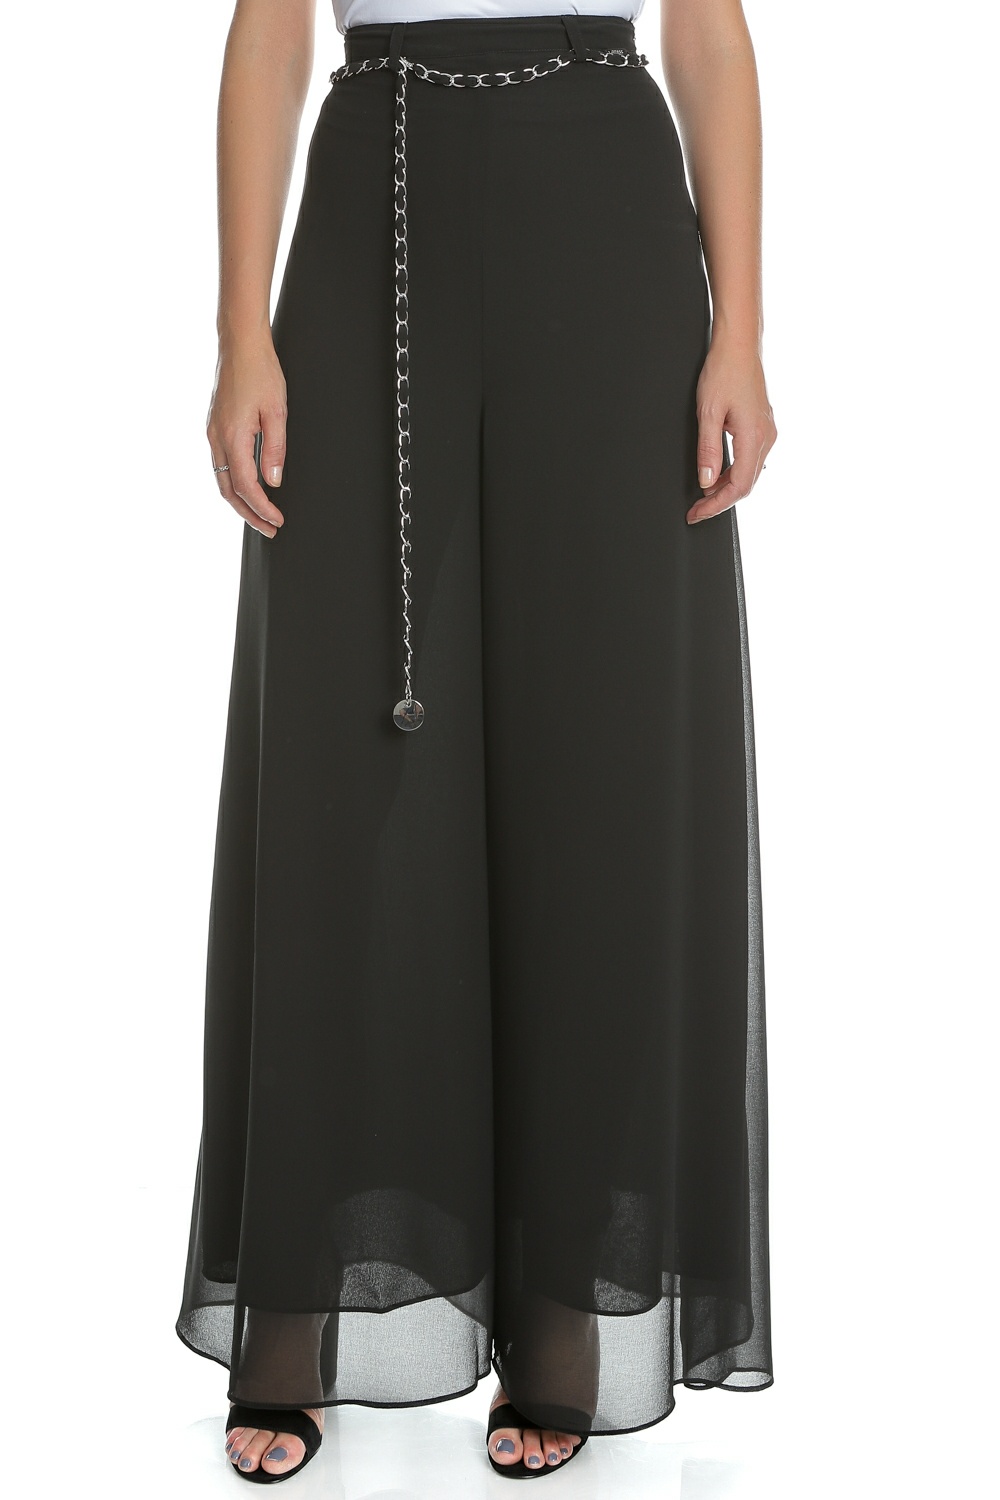 GUESS - Γυναικεία ψηλόμεση παντελόνα CHERYL GUESS μαύρη Γυναικεία/Ρούχα/Παντελόνια/Παντελόνες